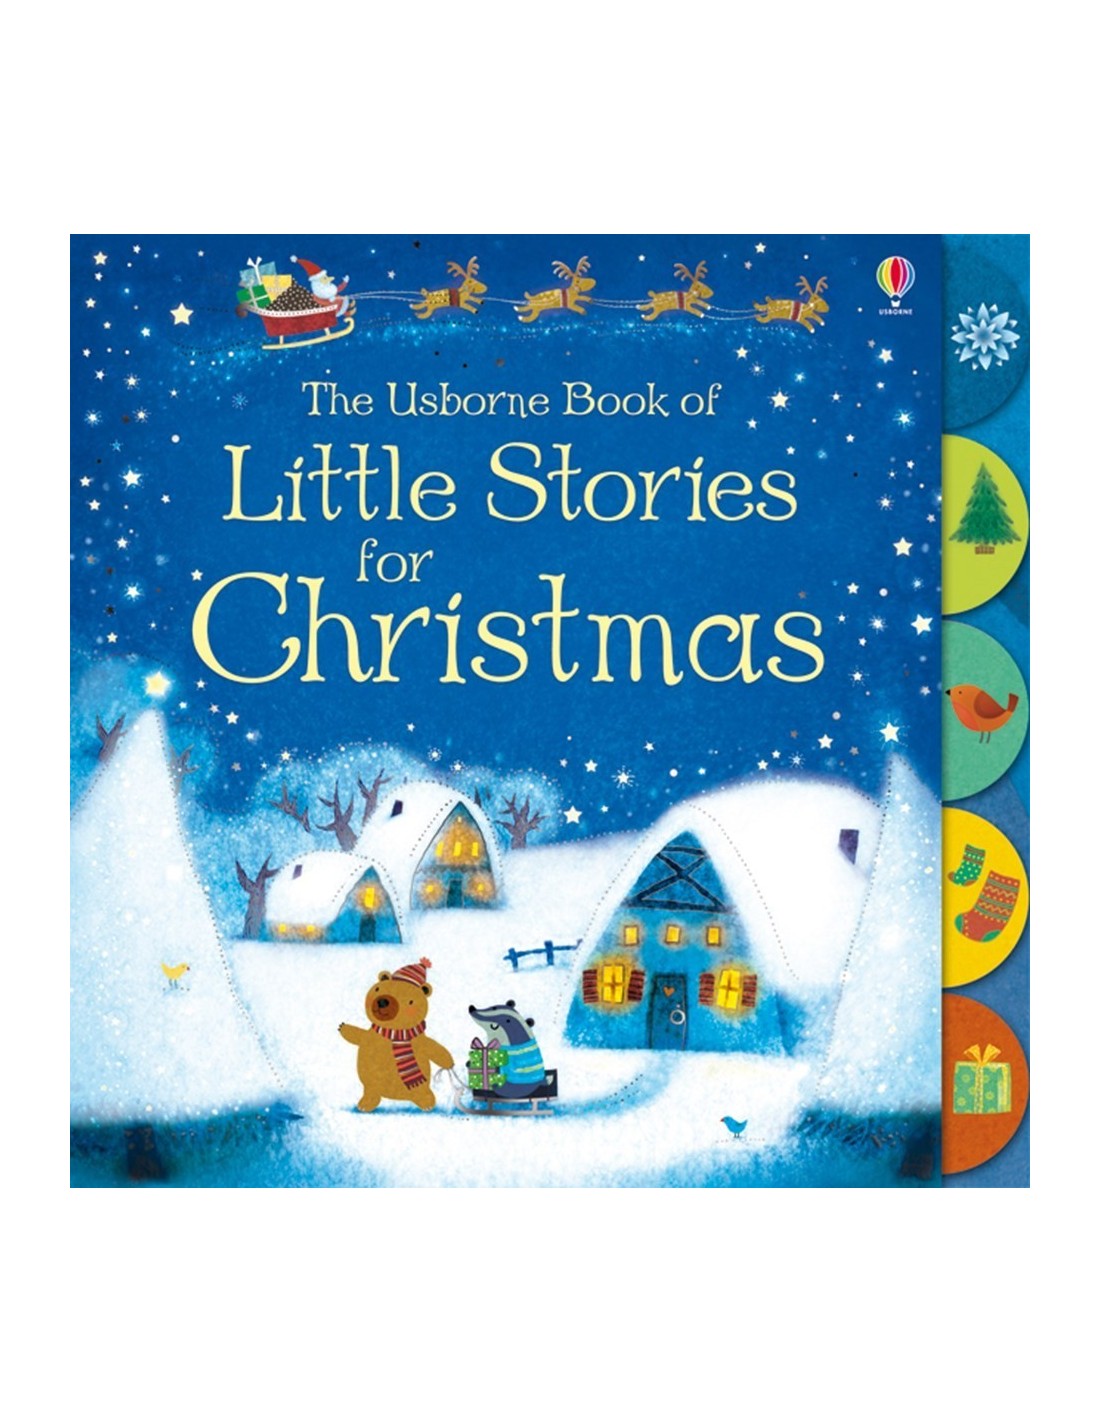 Little stories for Christmas